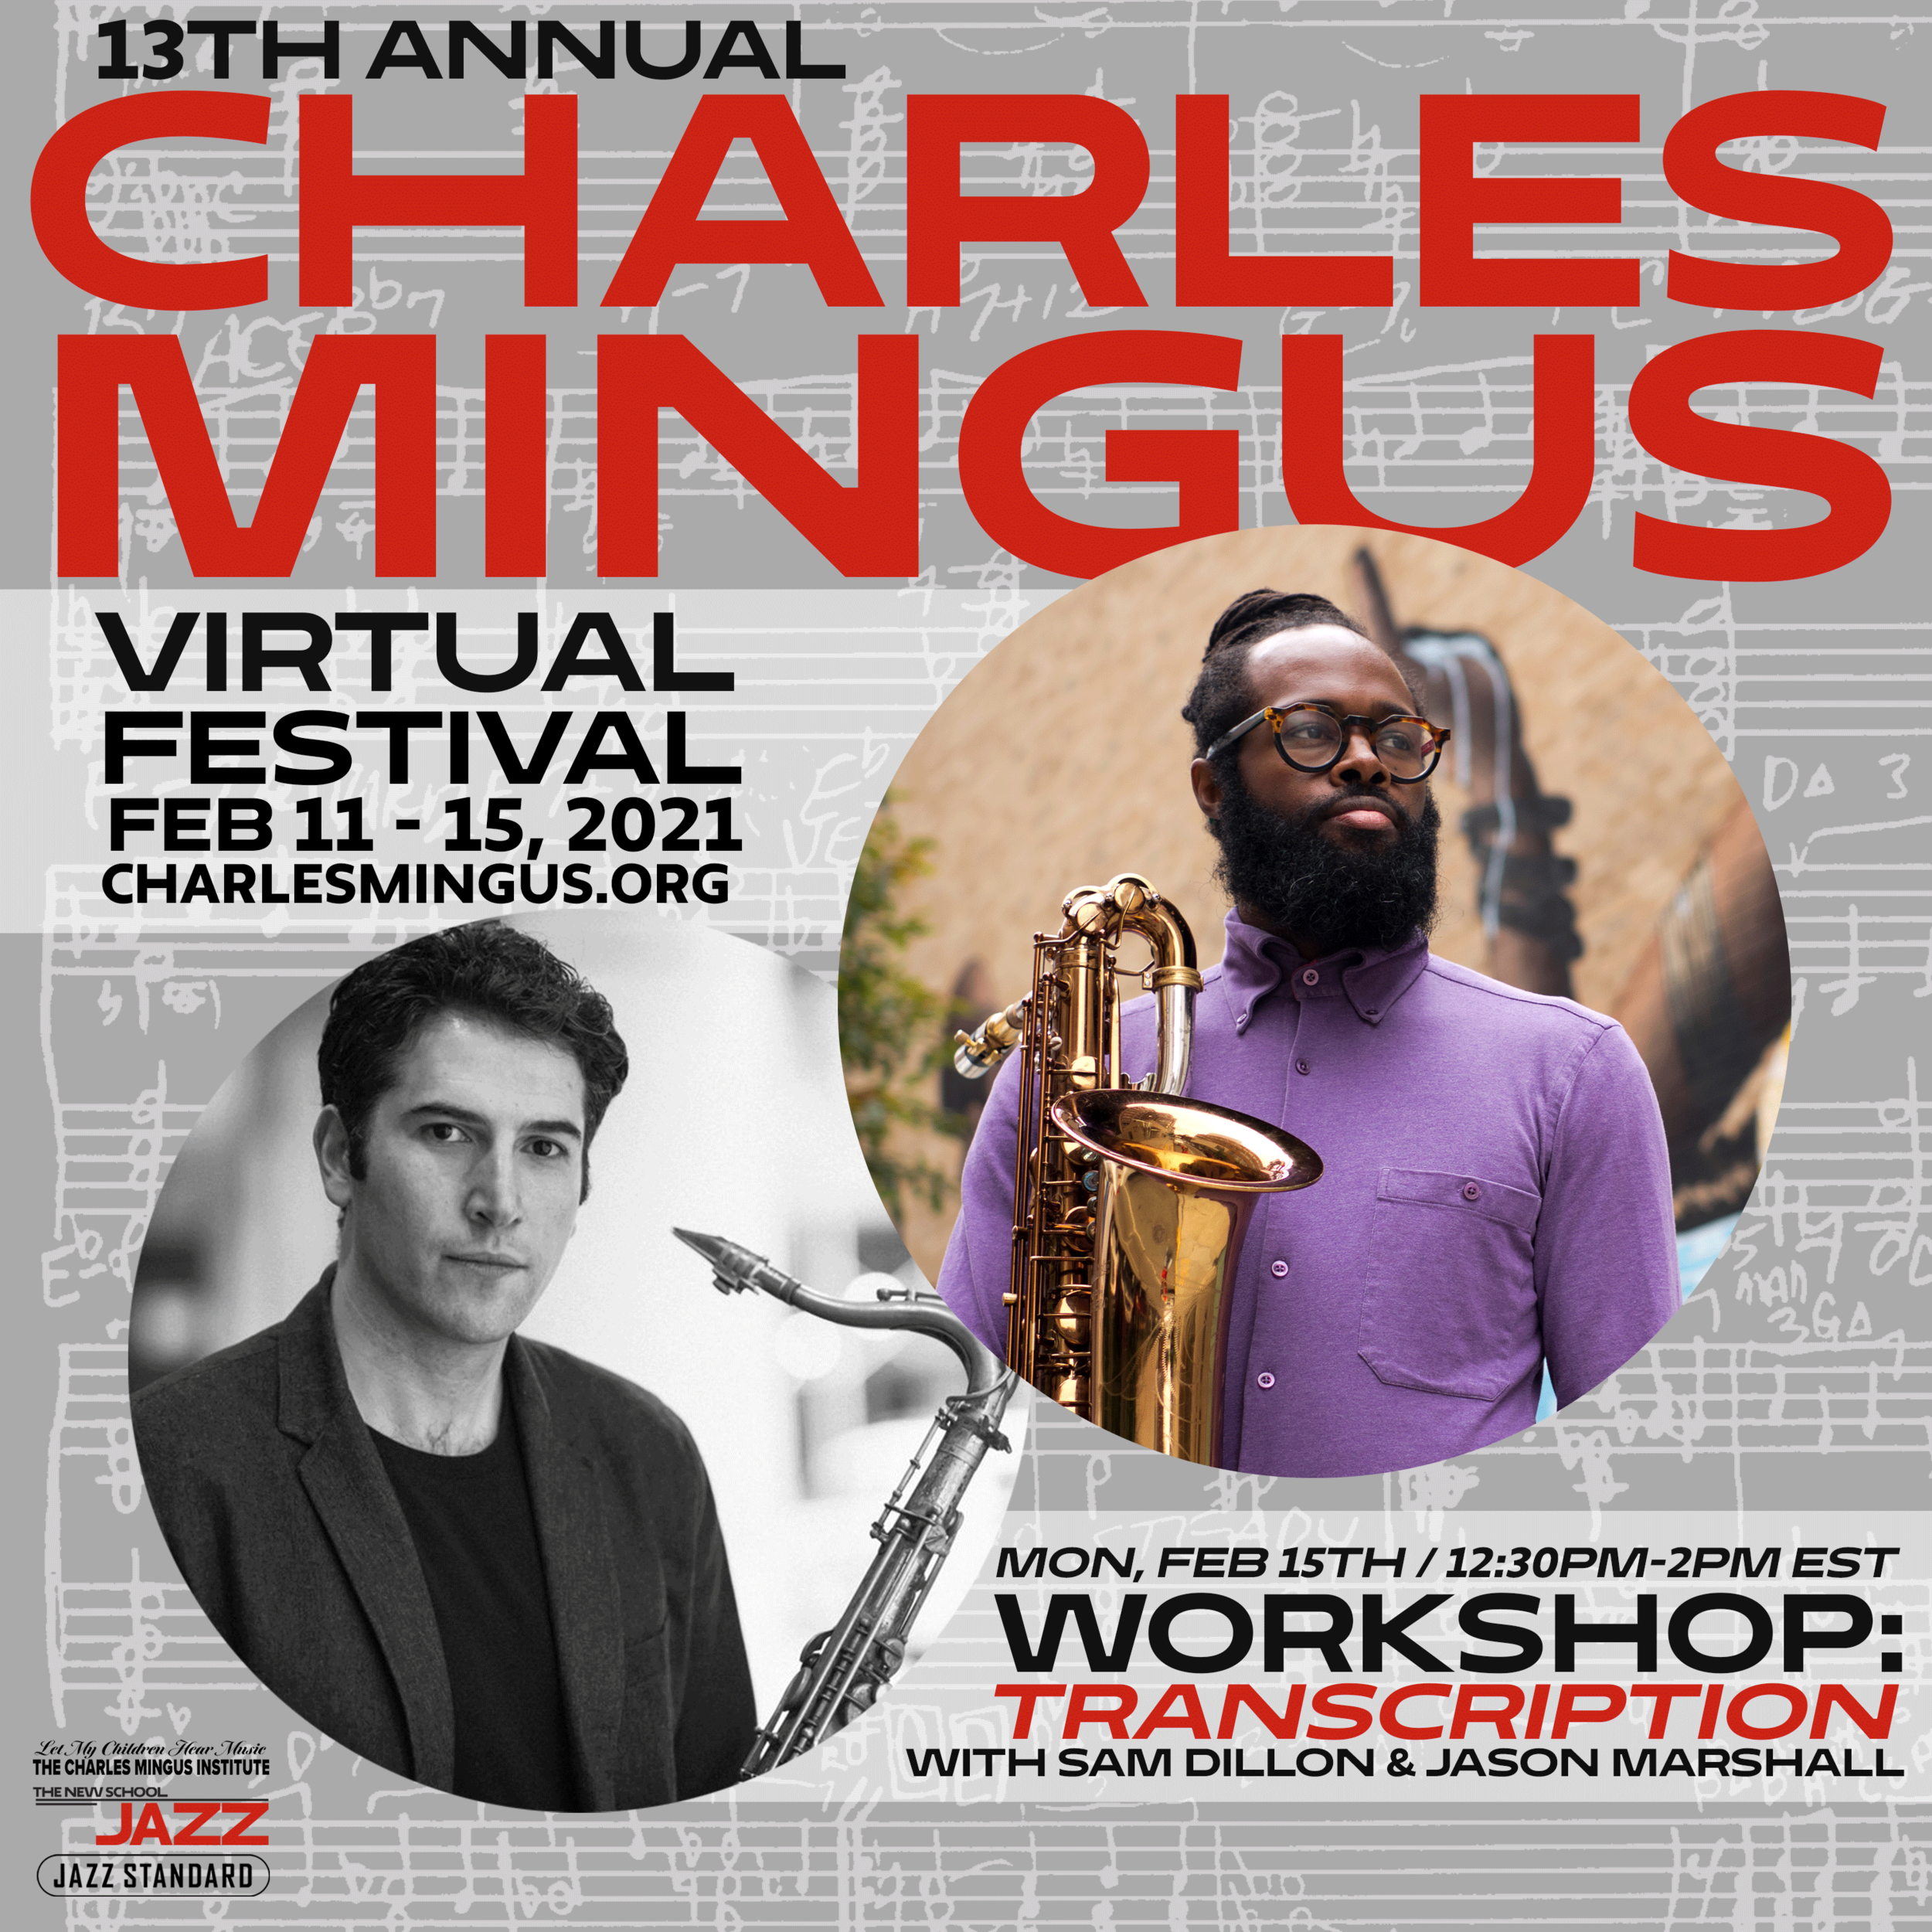 Mingus Fest 2021 / MASTER CLASS: Transcription Skills